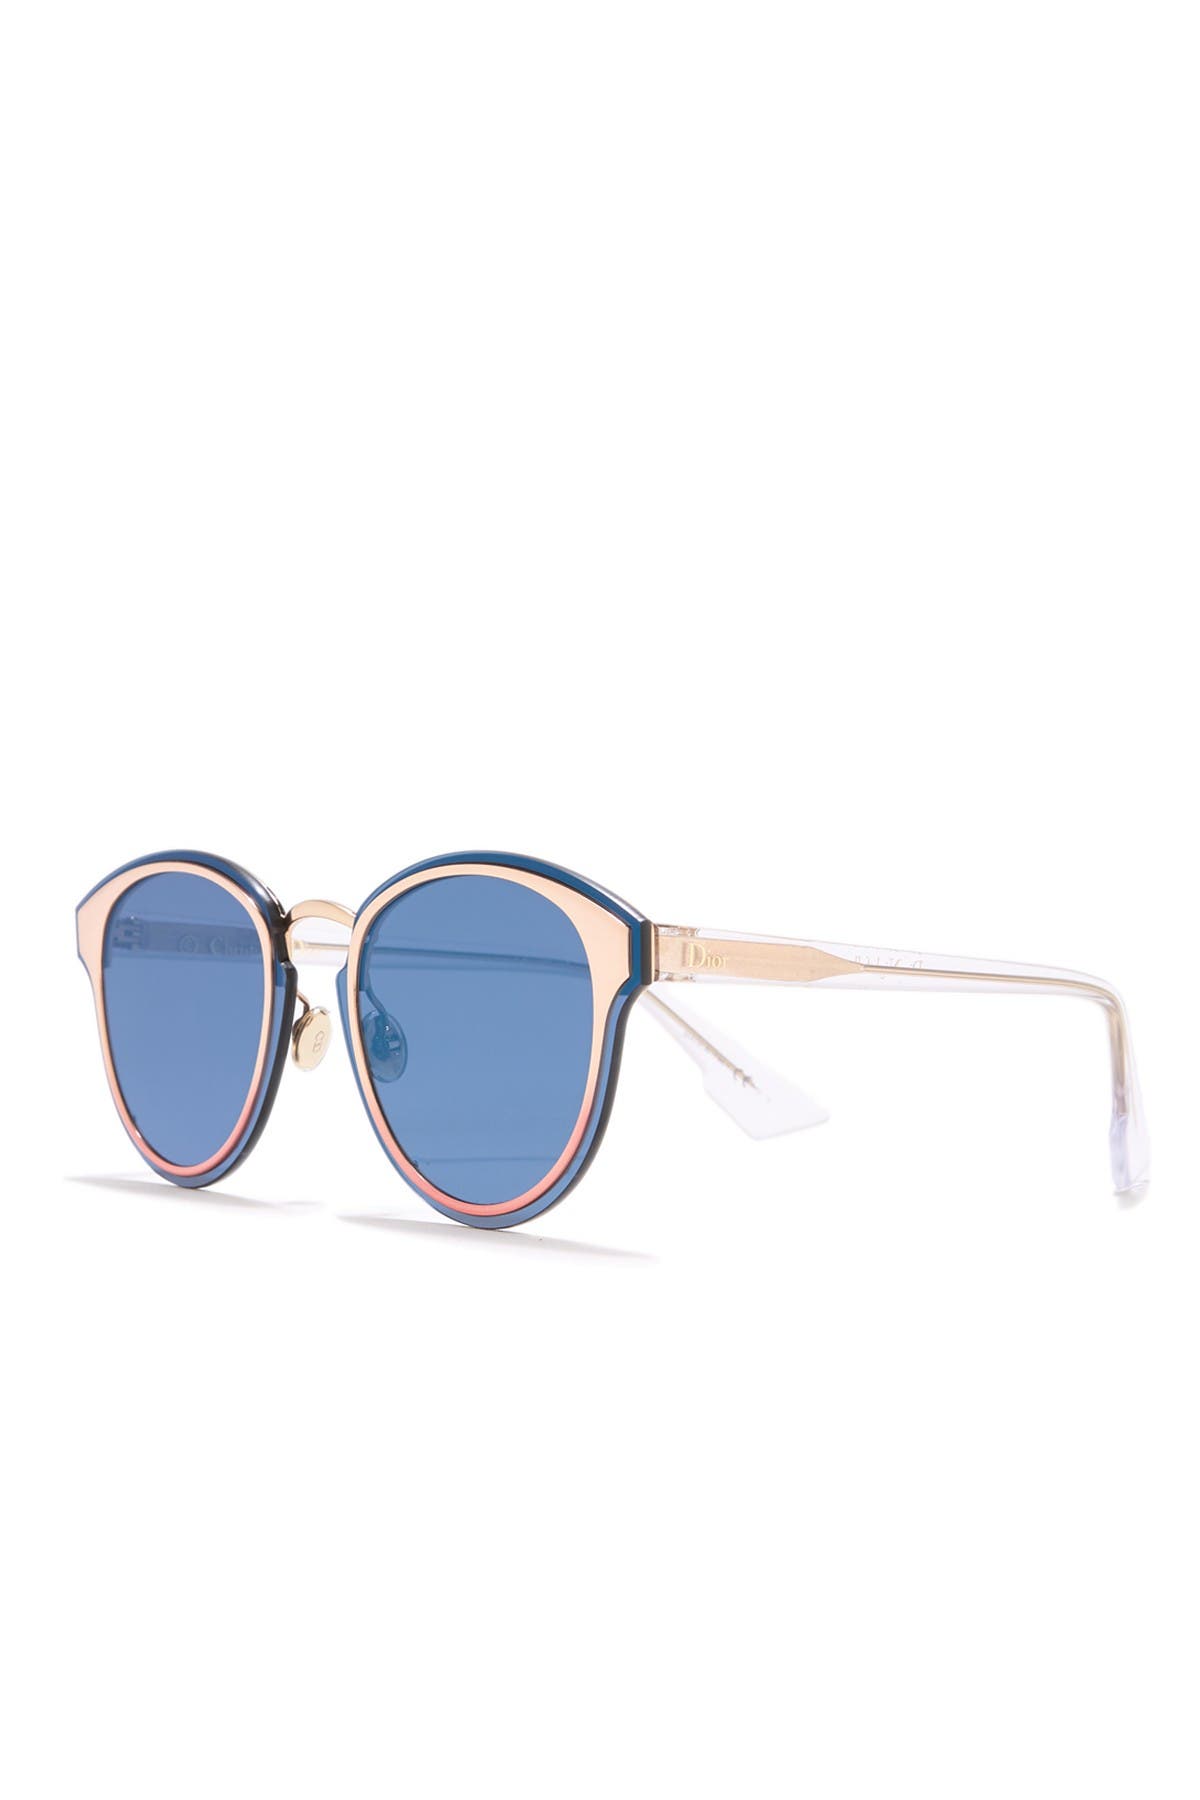 dior nightfall sunglasses